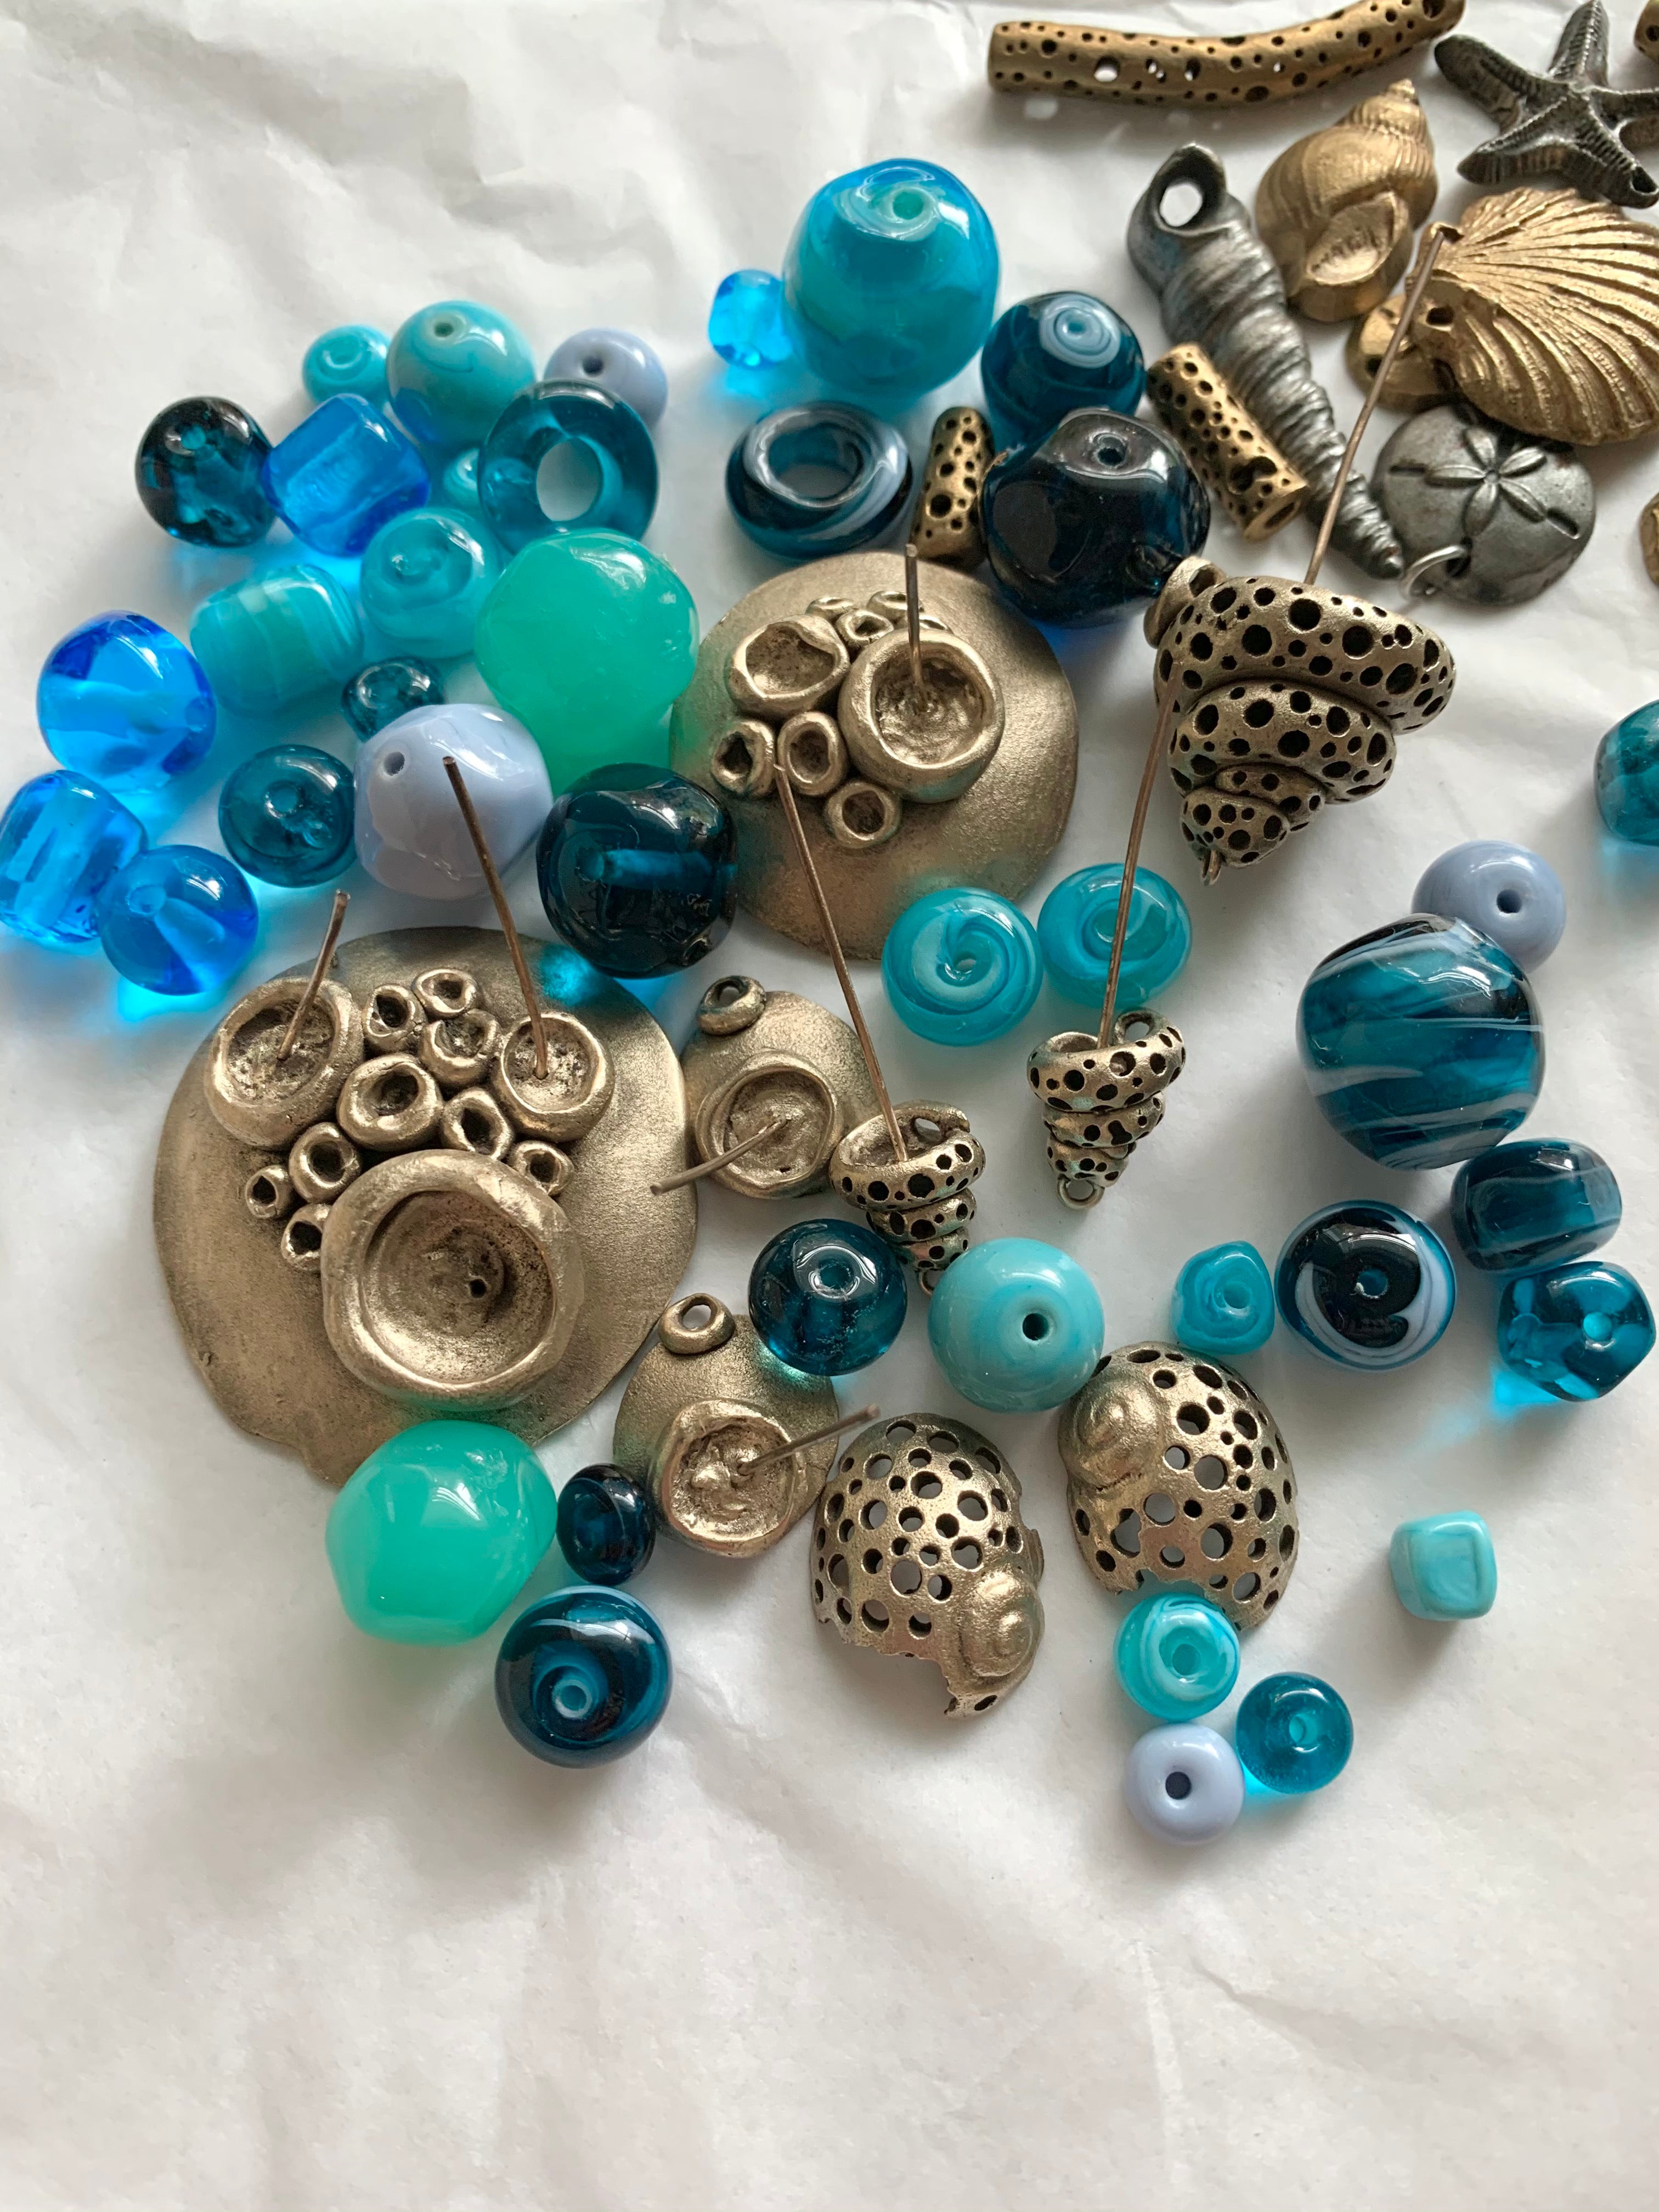 Blue artisan glass beads mingle with bronze handmade jewelry pieces